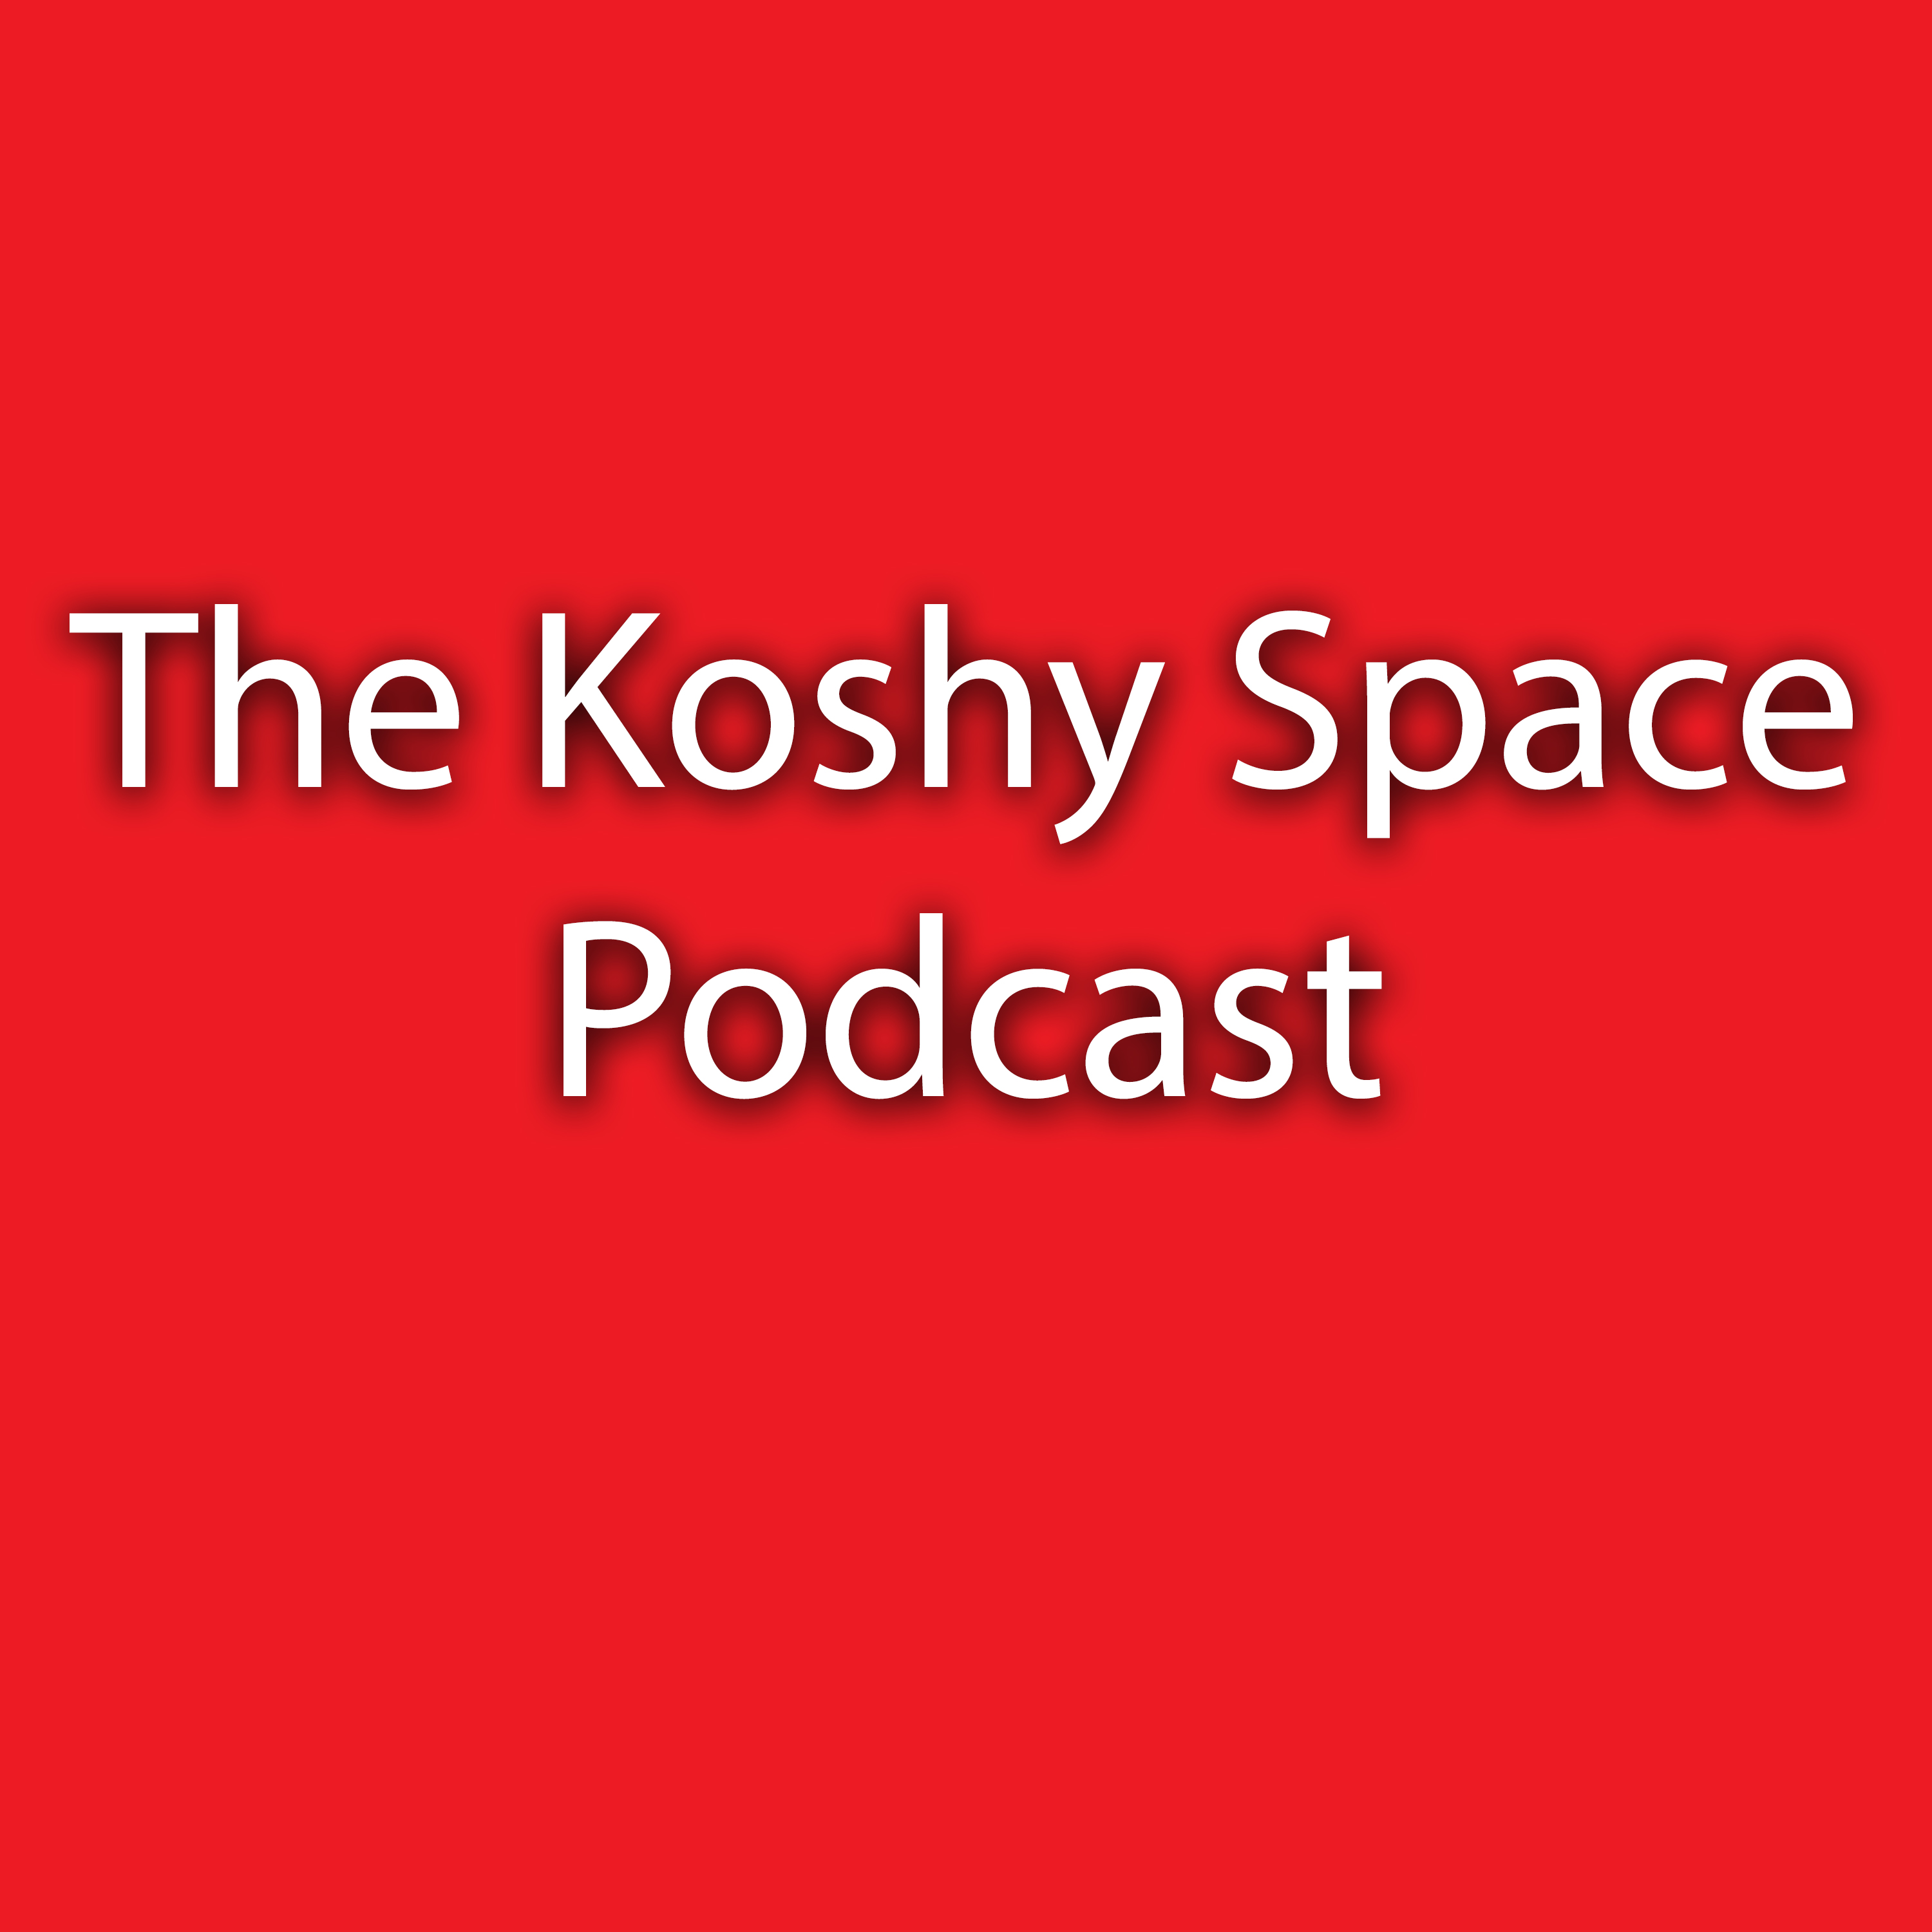 The Koshy Space Podcast